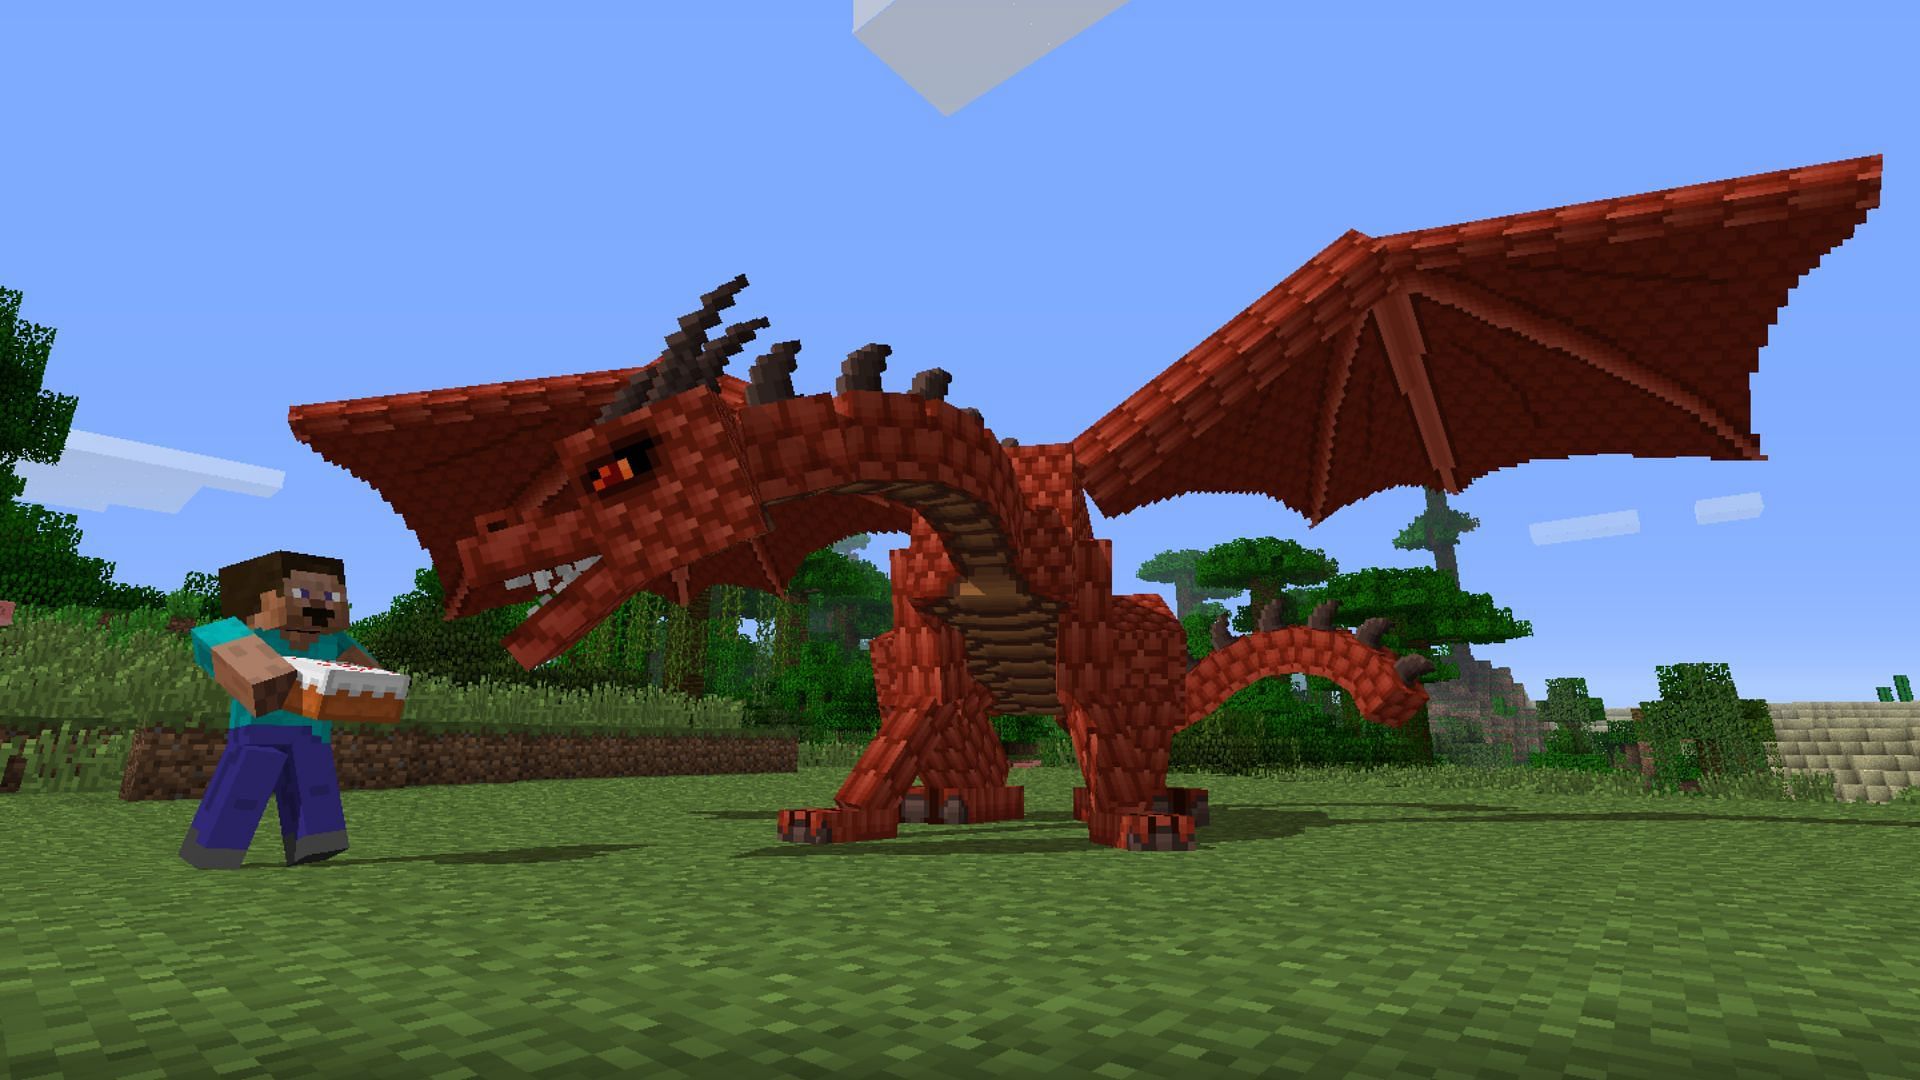 Red dragon mod based on the concept (Image via ShadowWolf1203 minecraftforum.net)